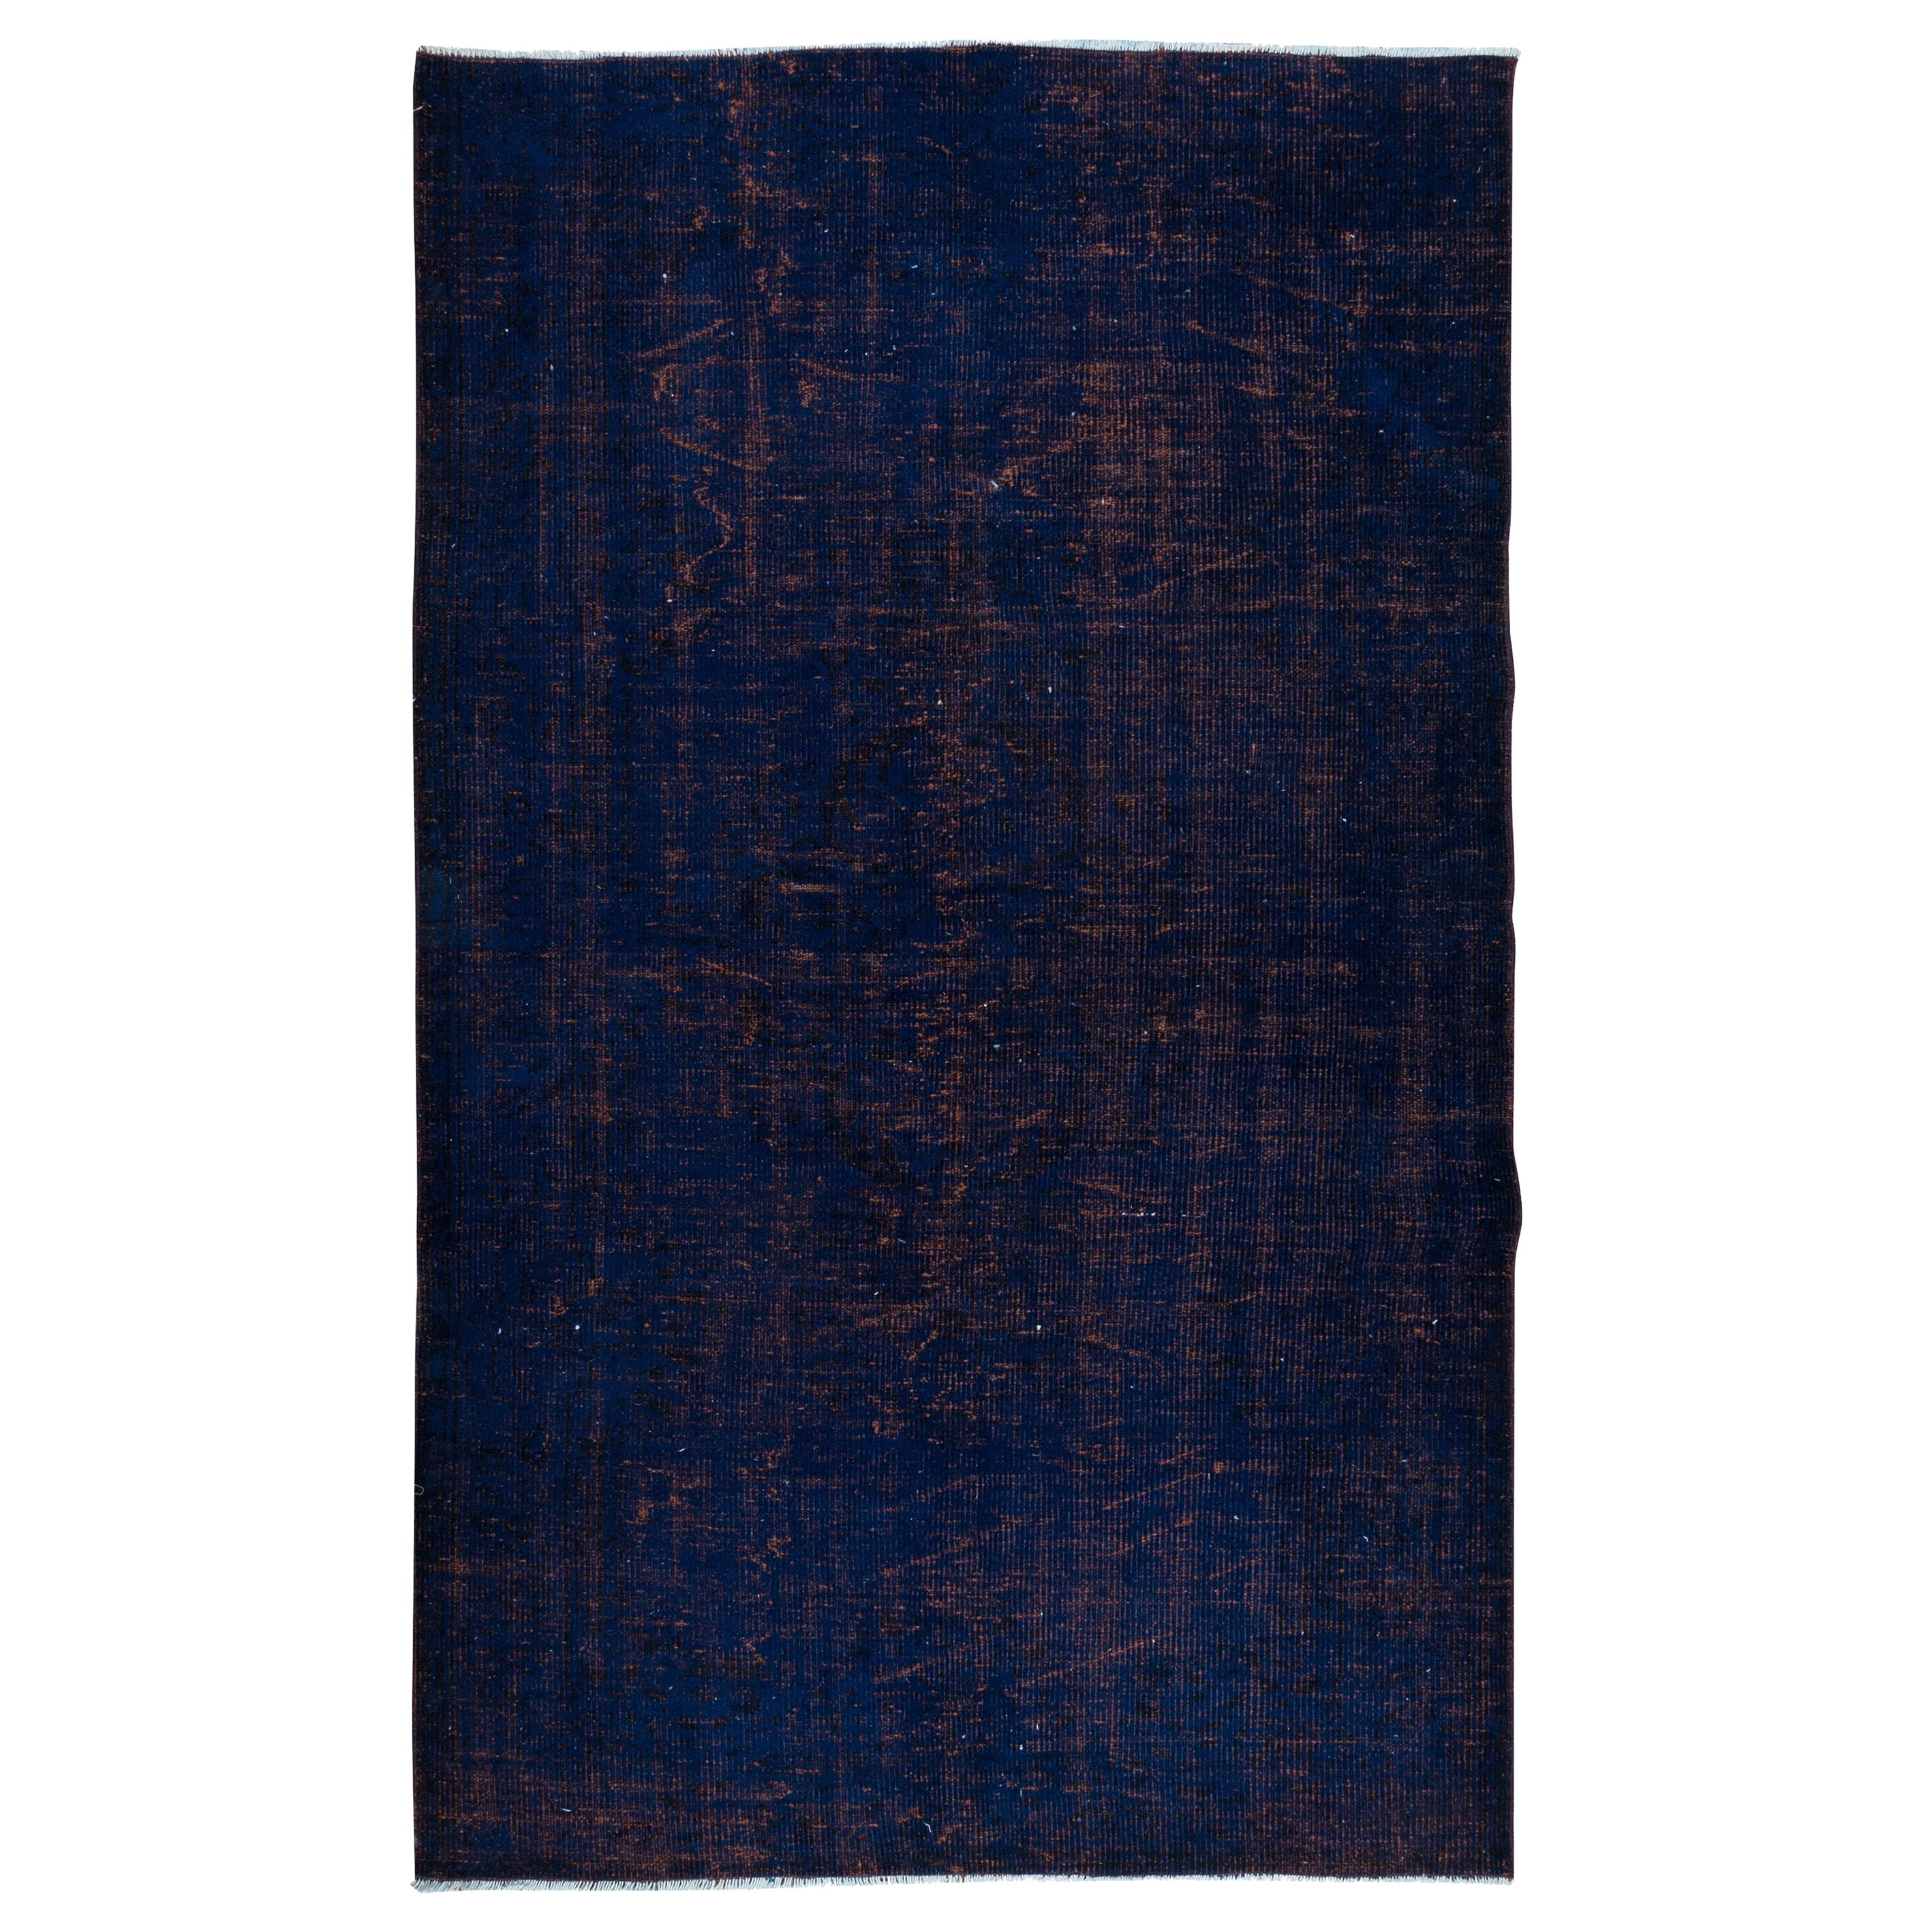 5.3x8.3 Ft Handmade Navy Blue Rug, Modern Turkish Carpet in Ultramarine Blue